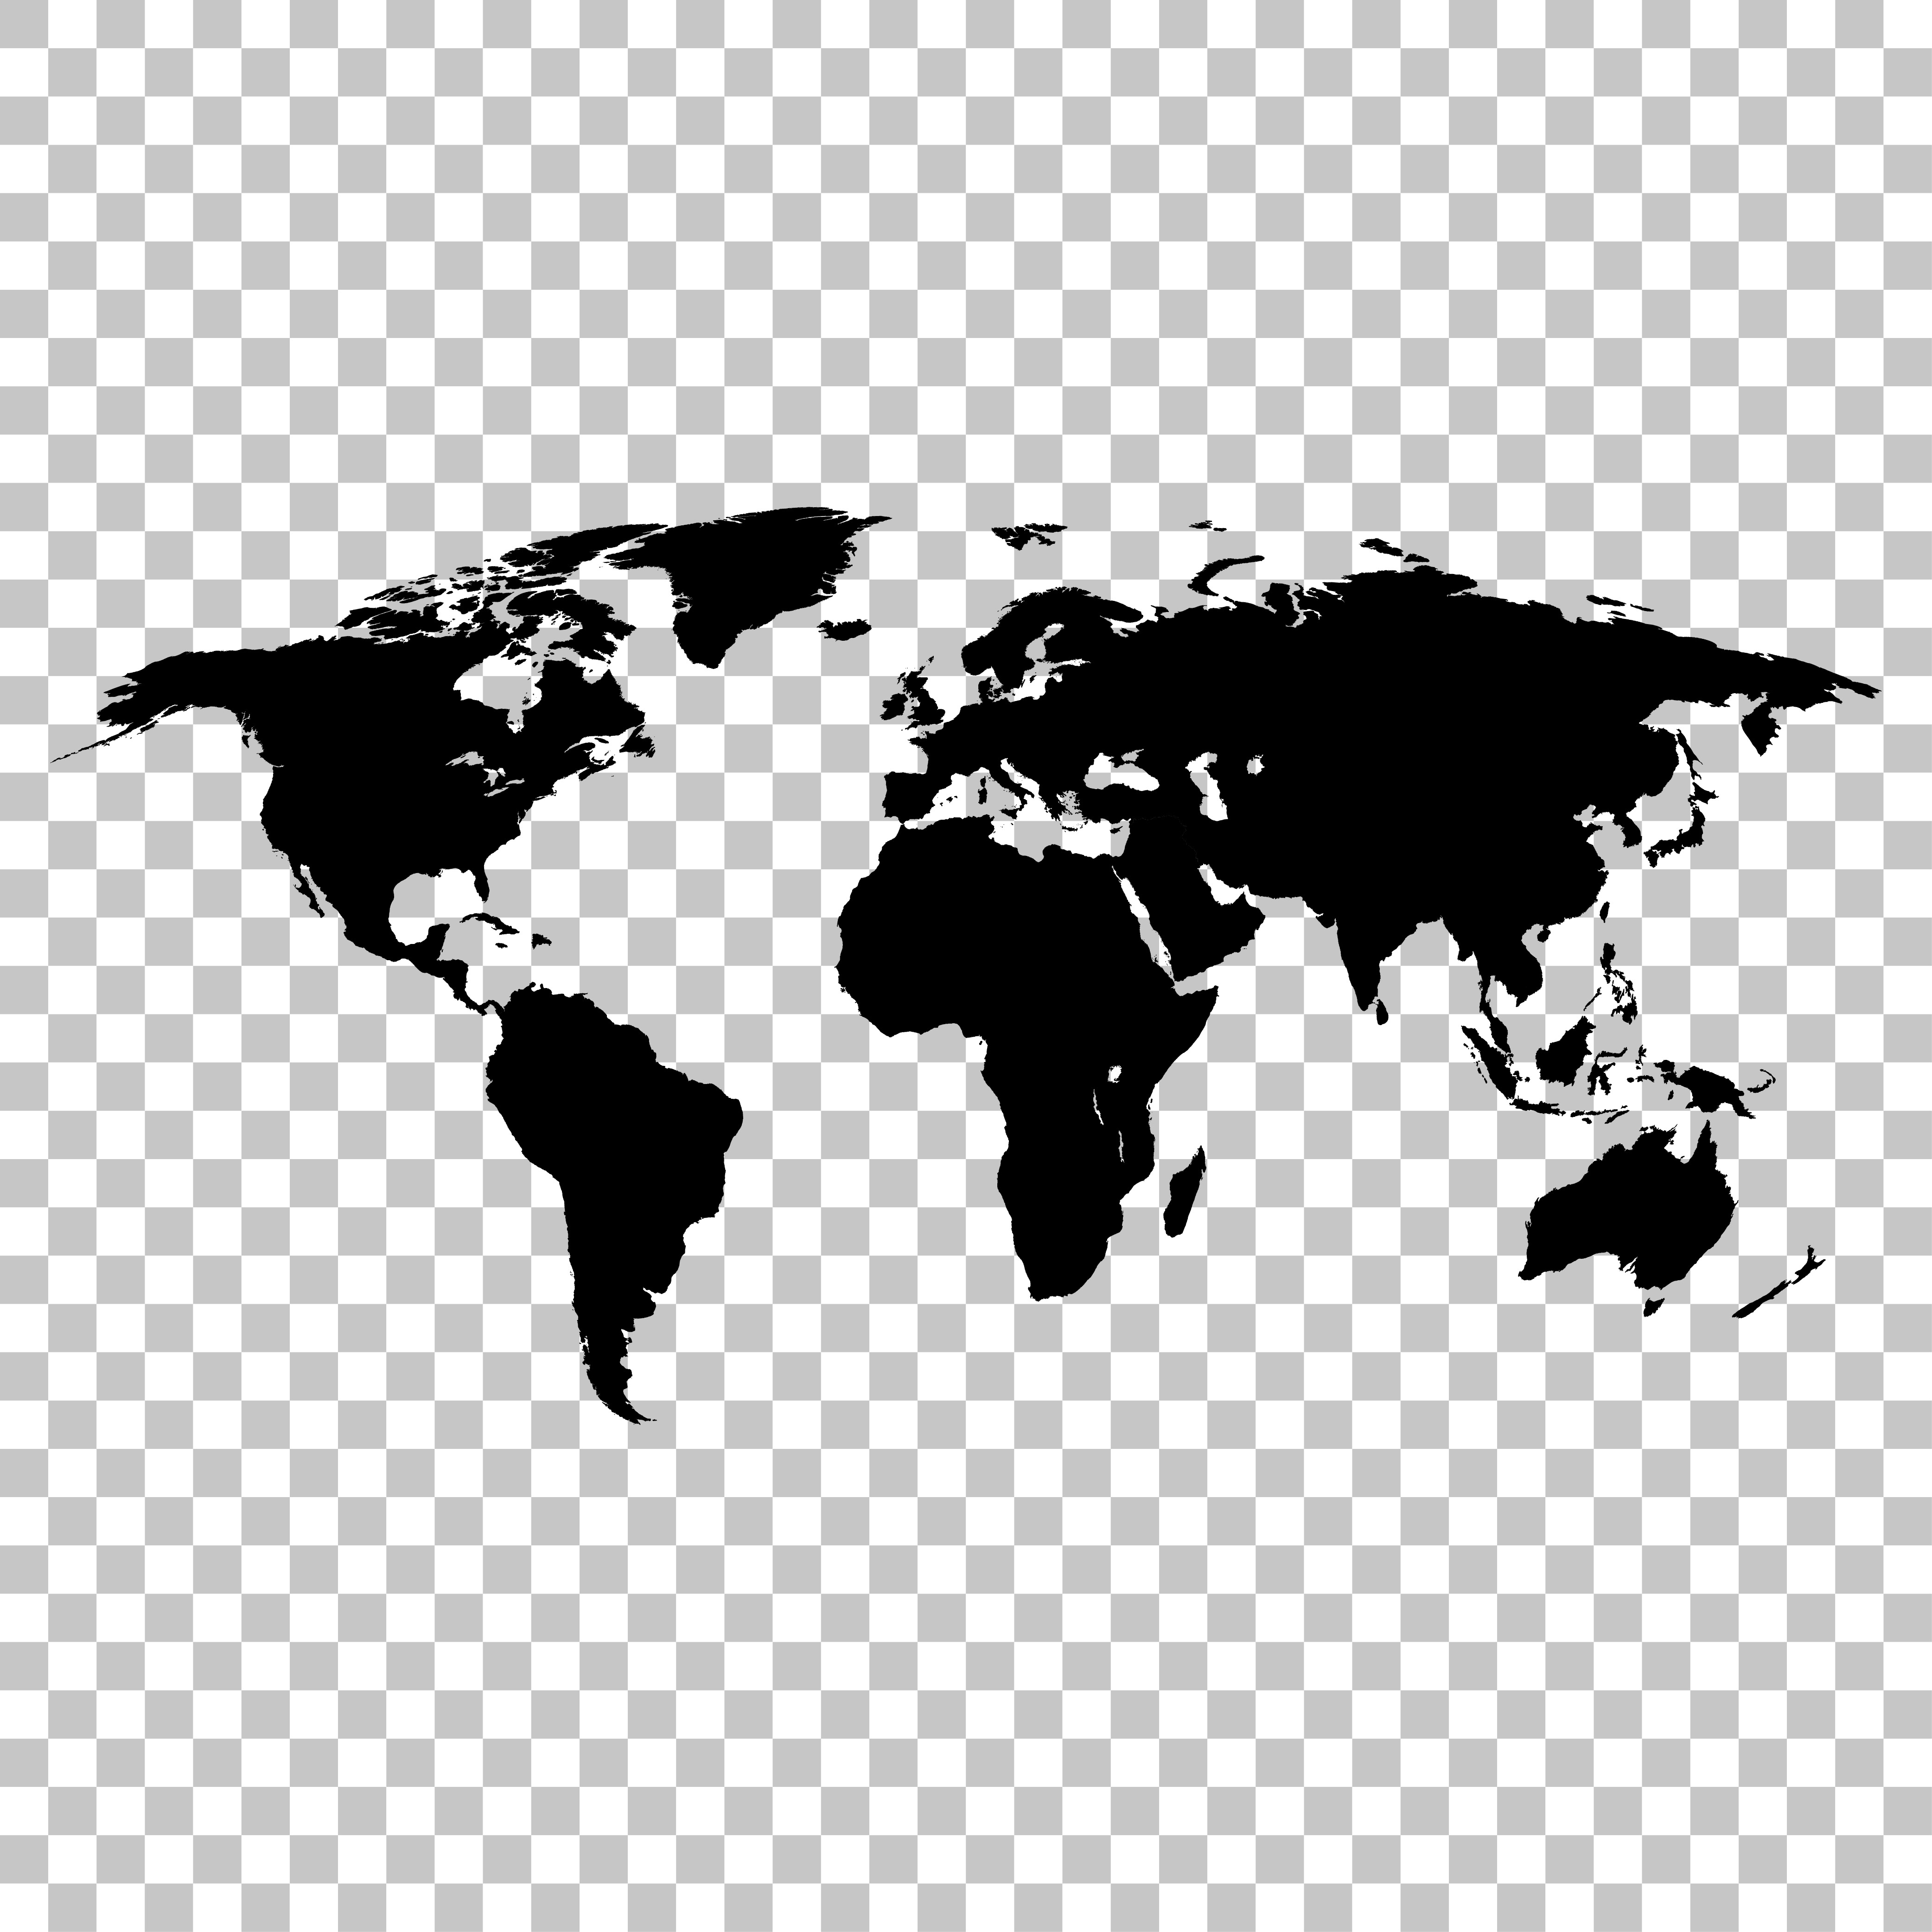 World map black colored silhouette ~ Illustrations ~ Creative Market